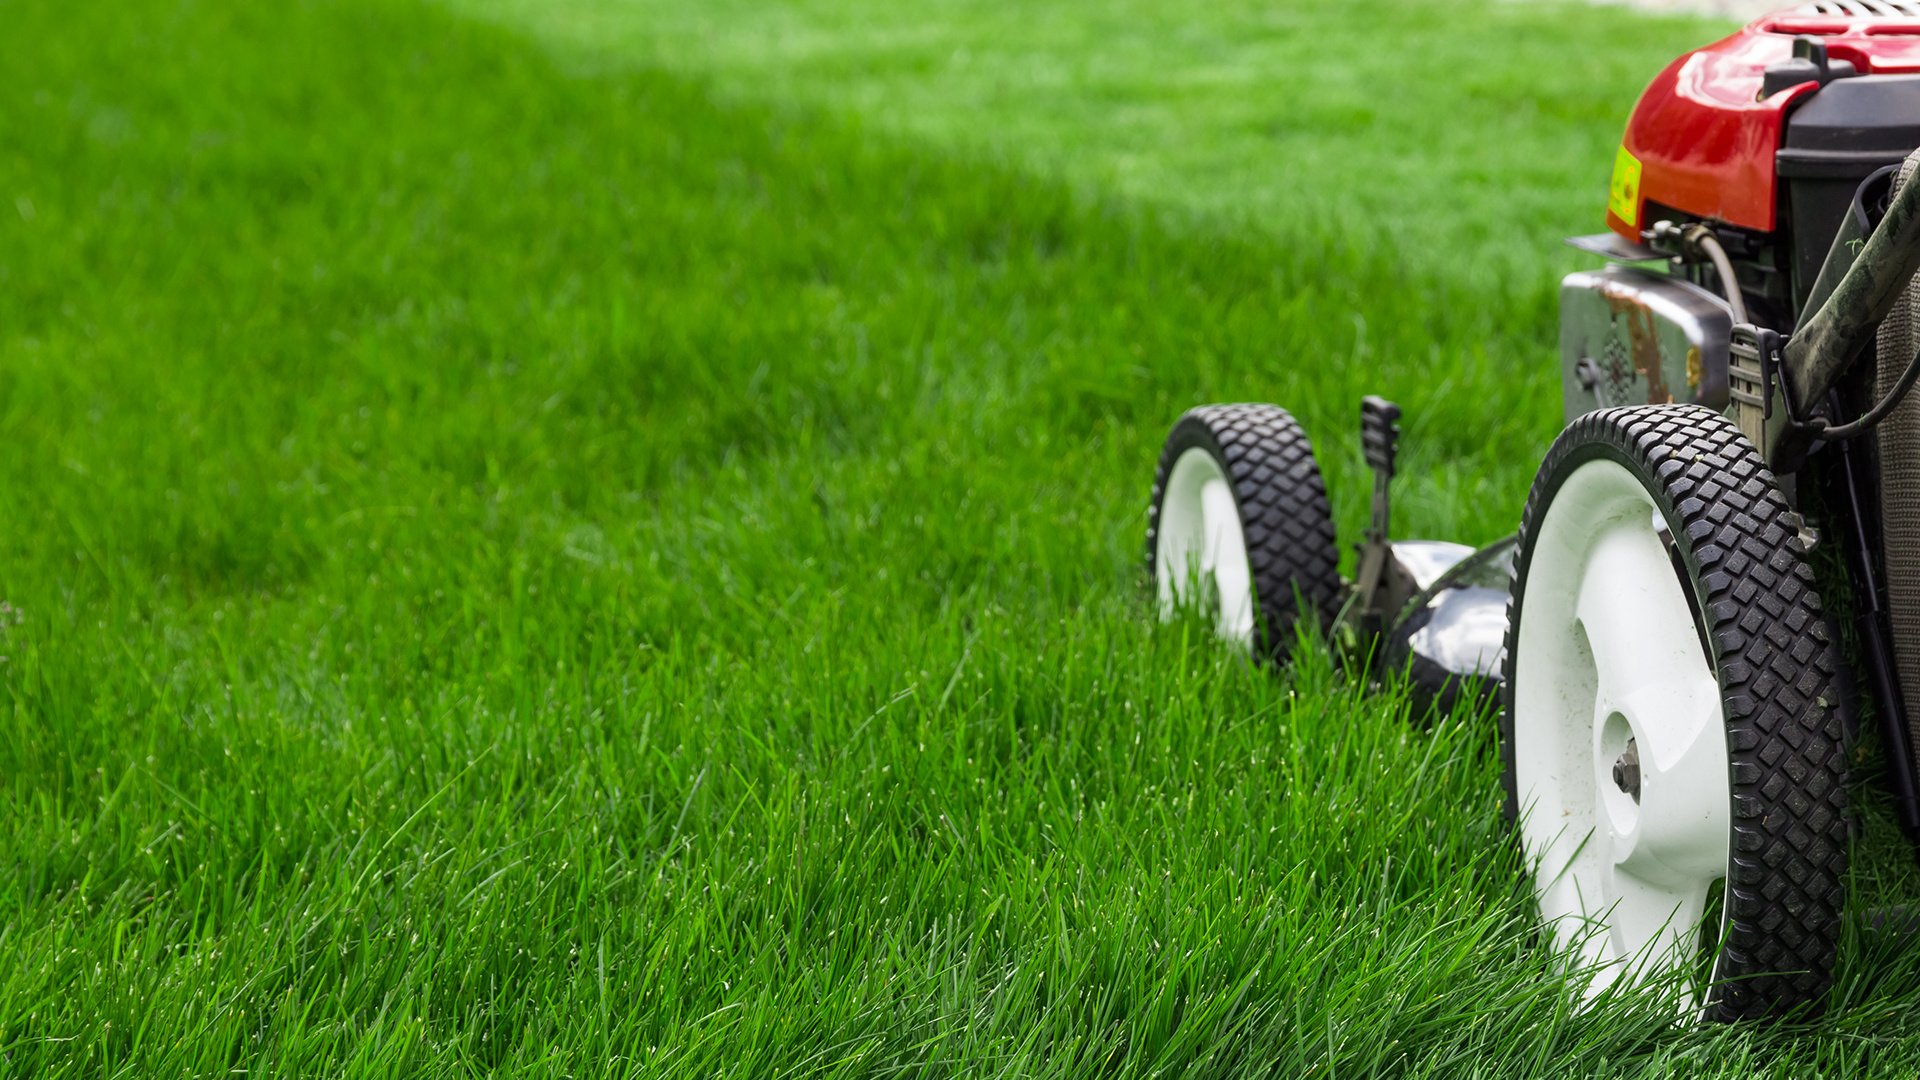 Lawn mower mowing green grass